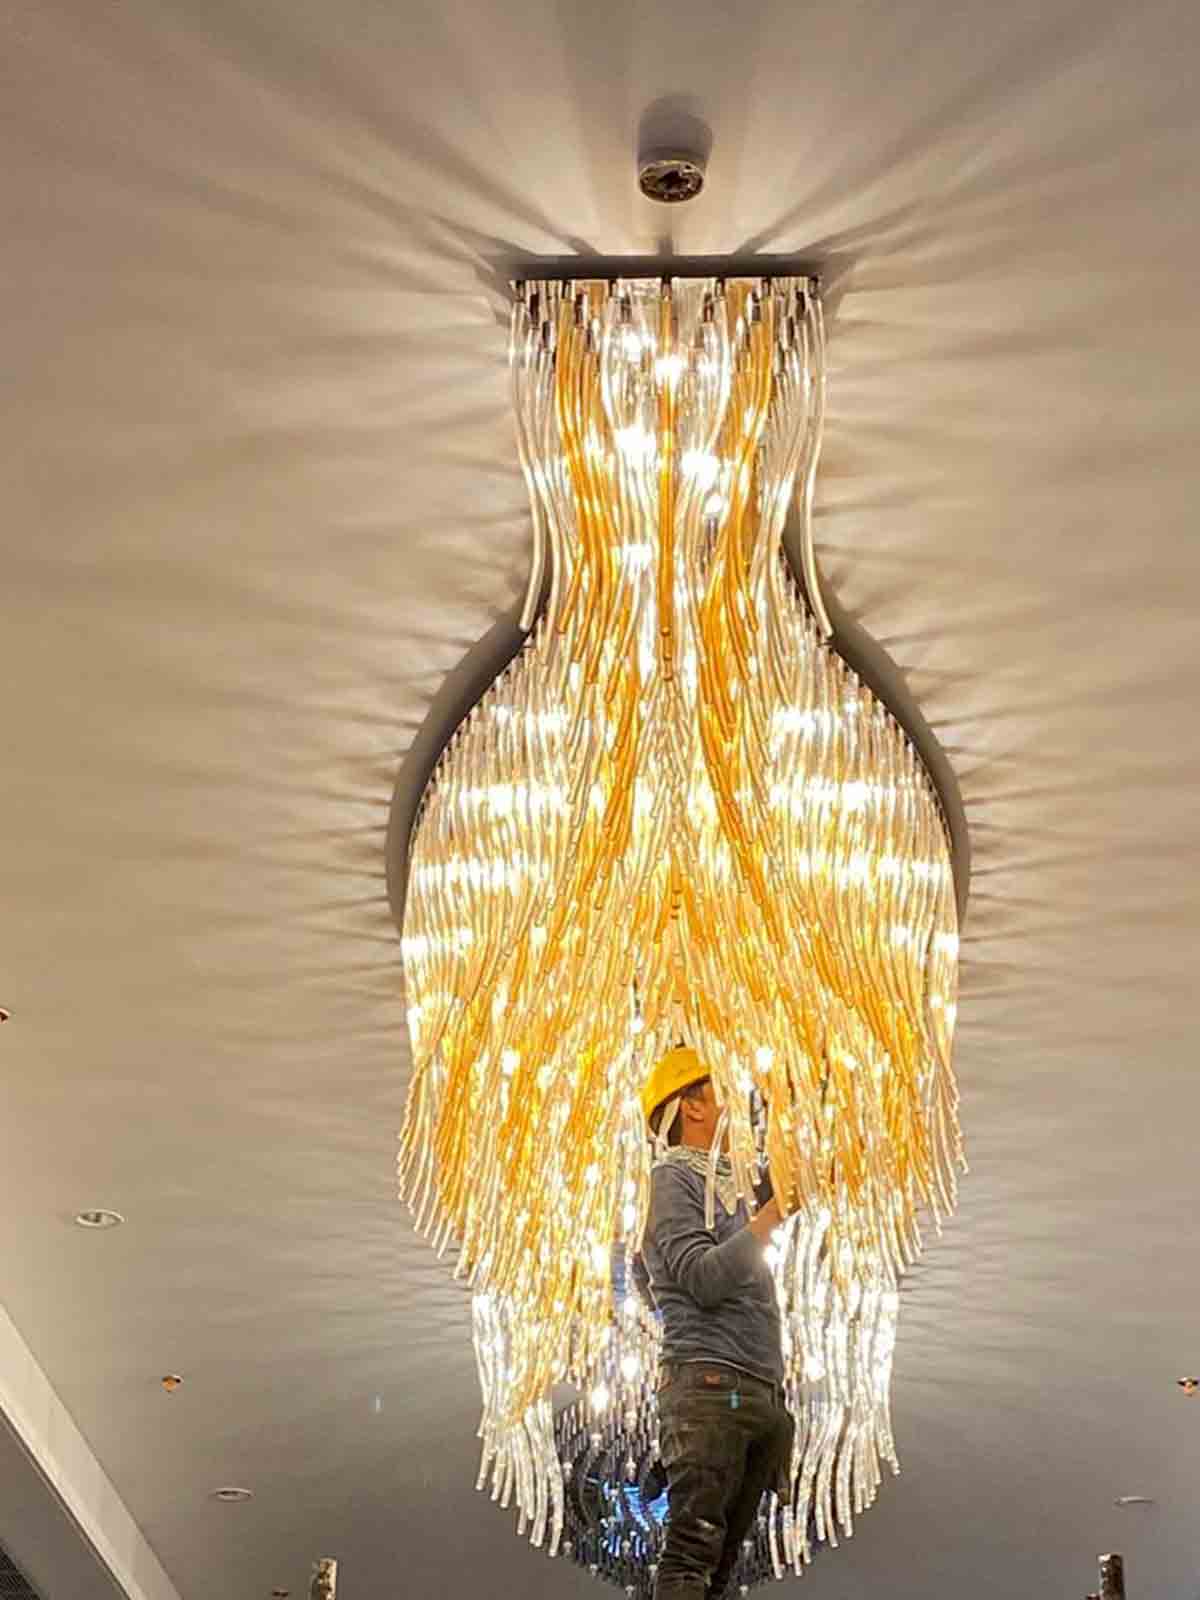 Installation of chandelier by Shree Lite